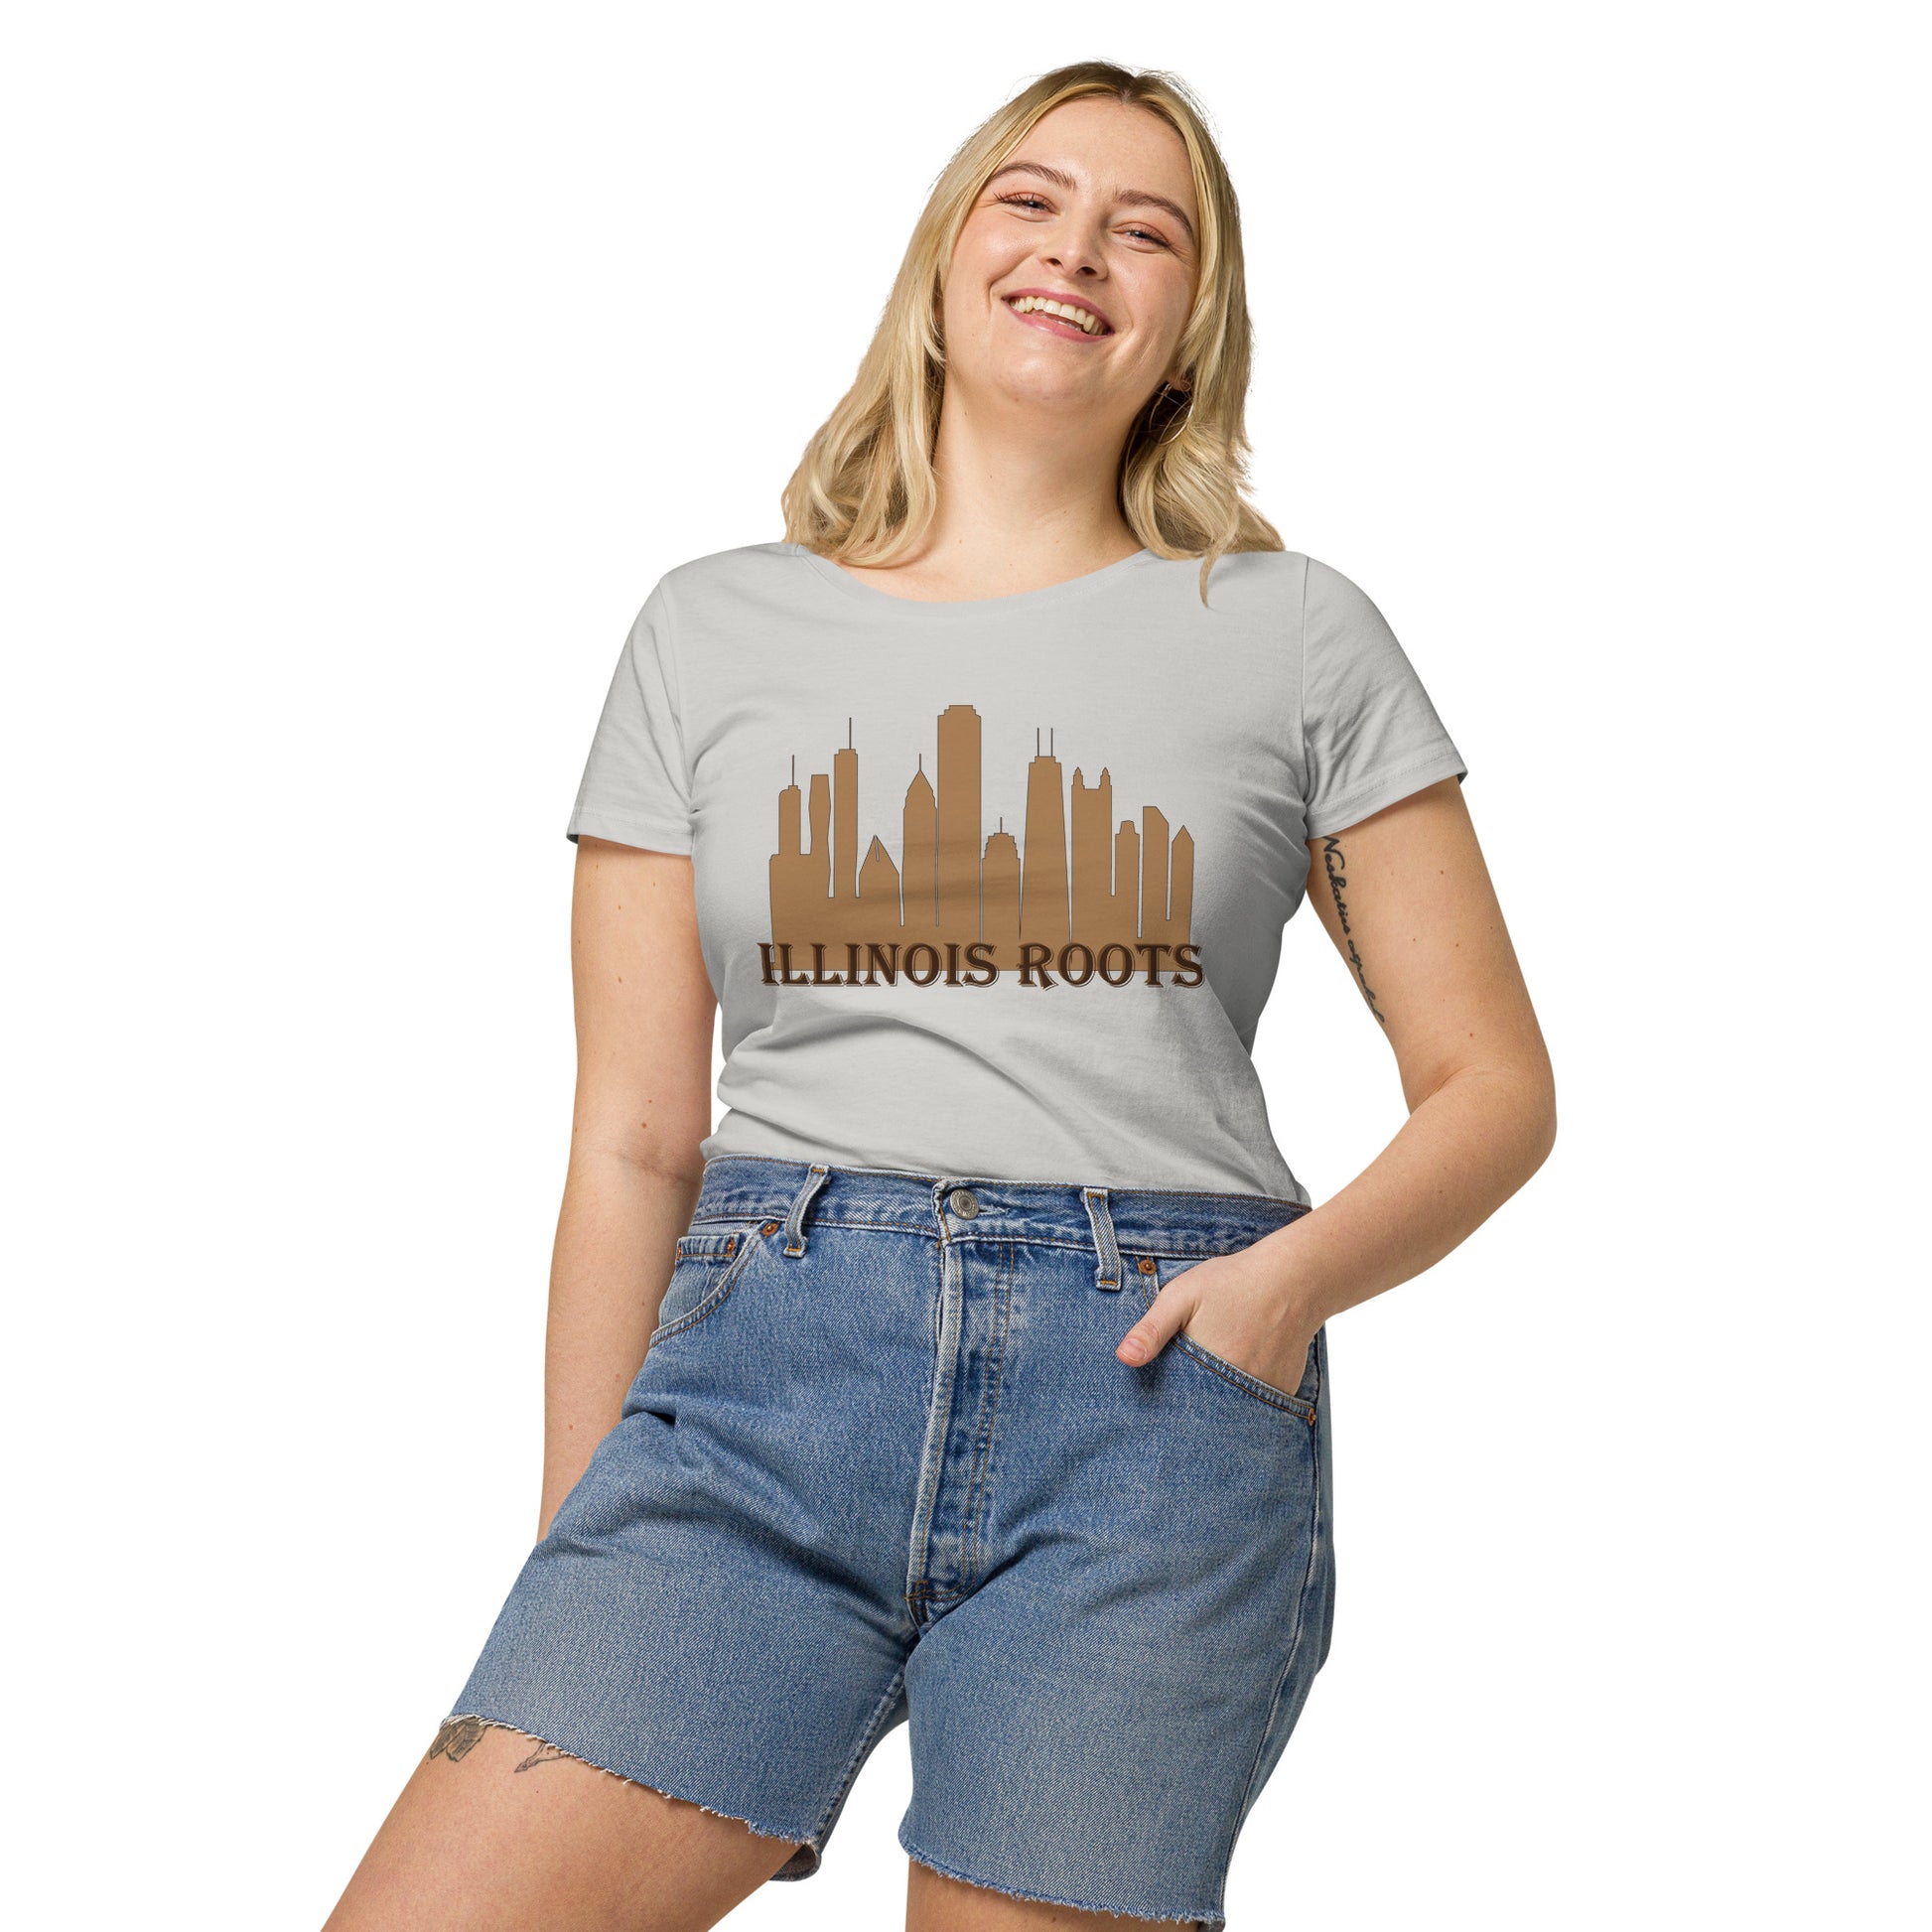 Illinois Roots Women’s Organic T-shirt